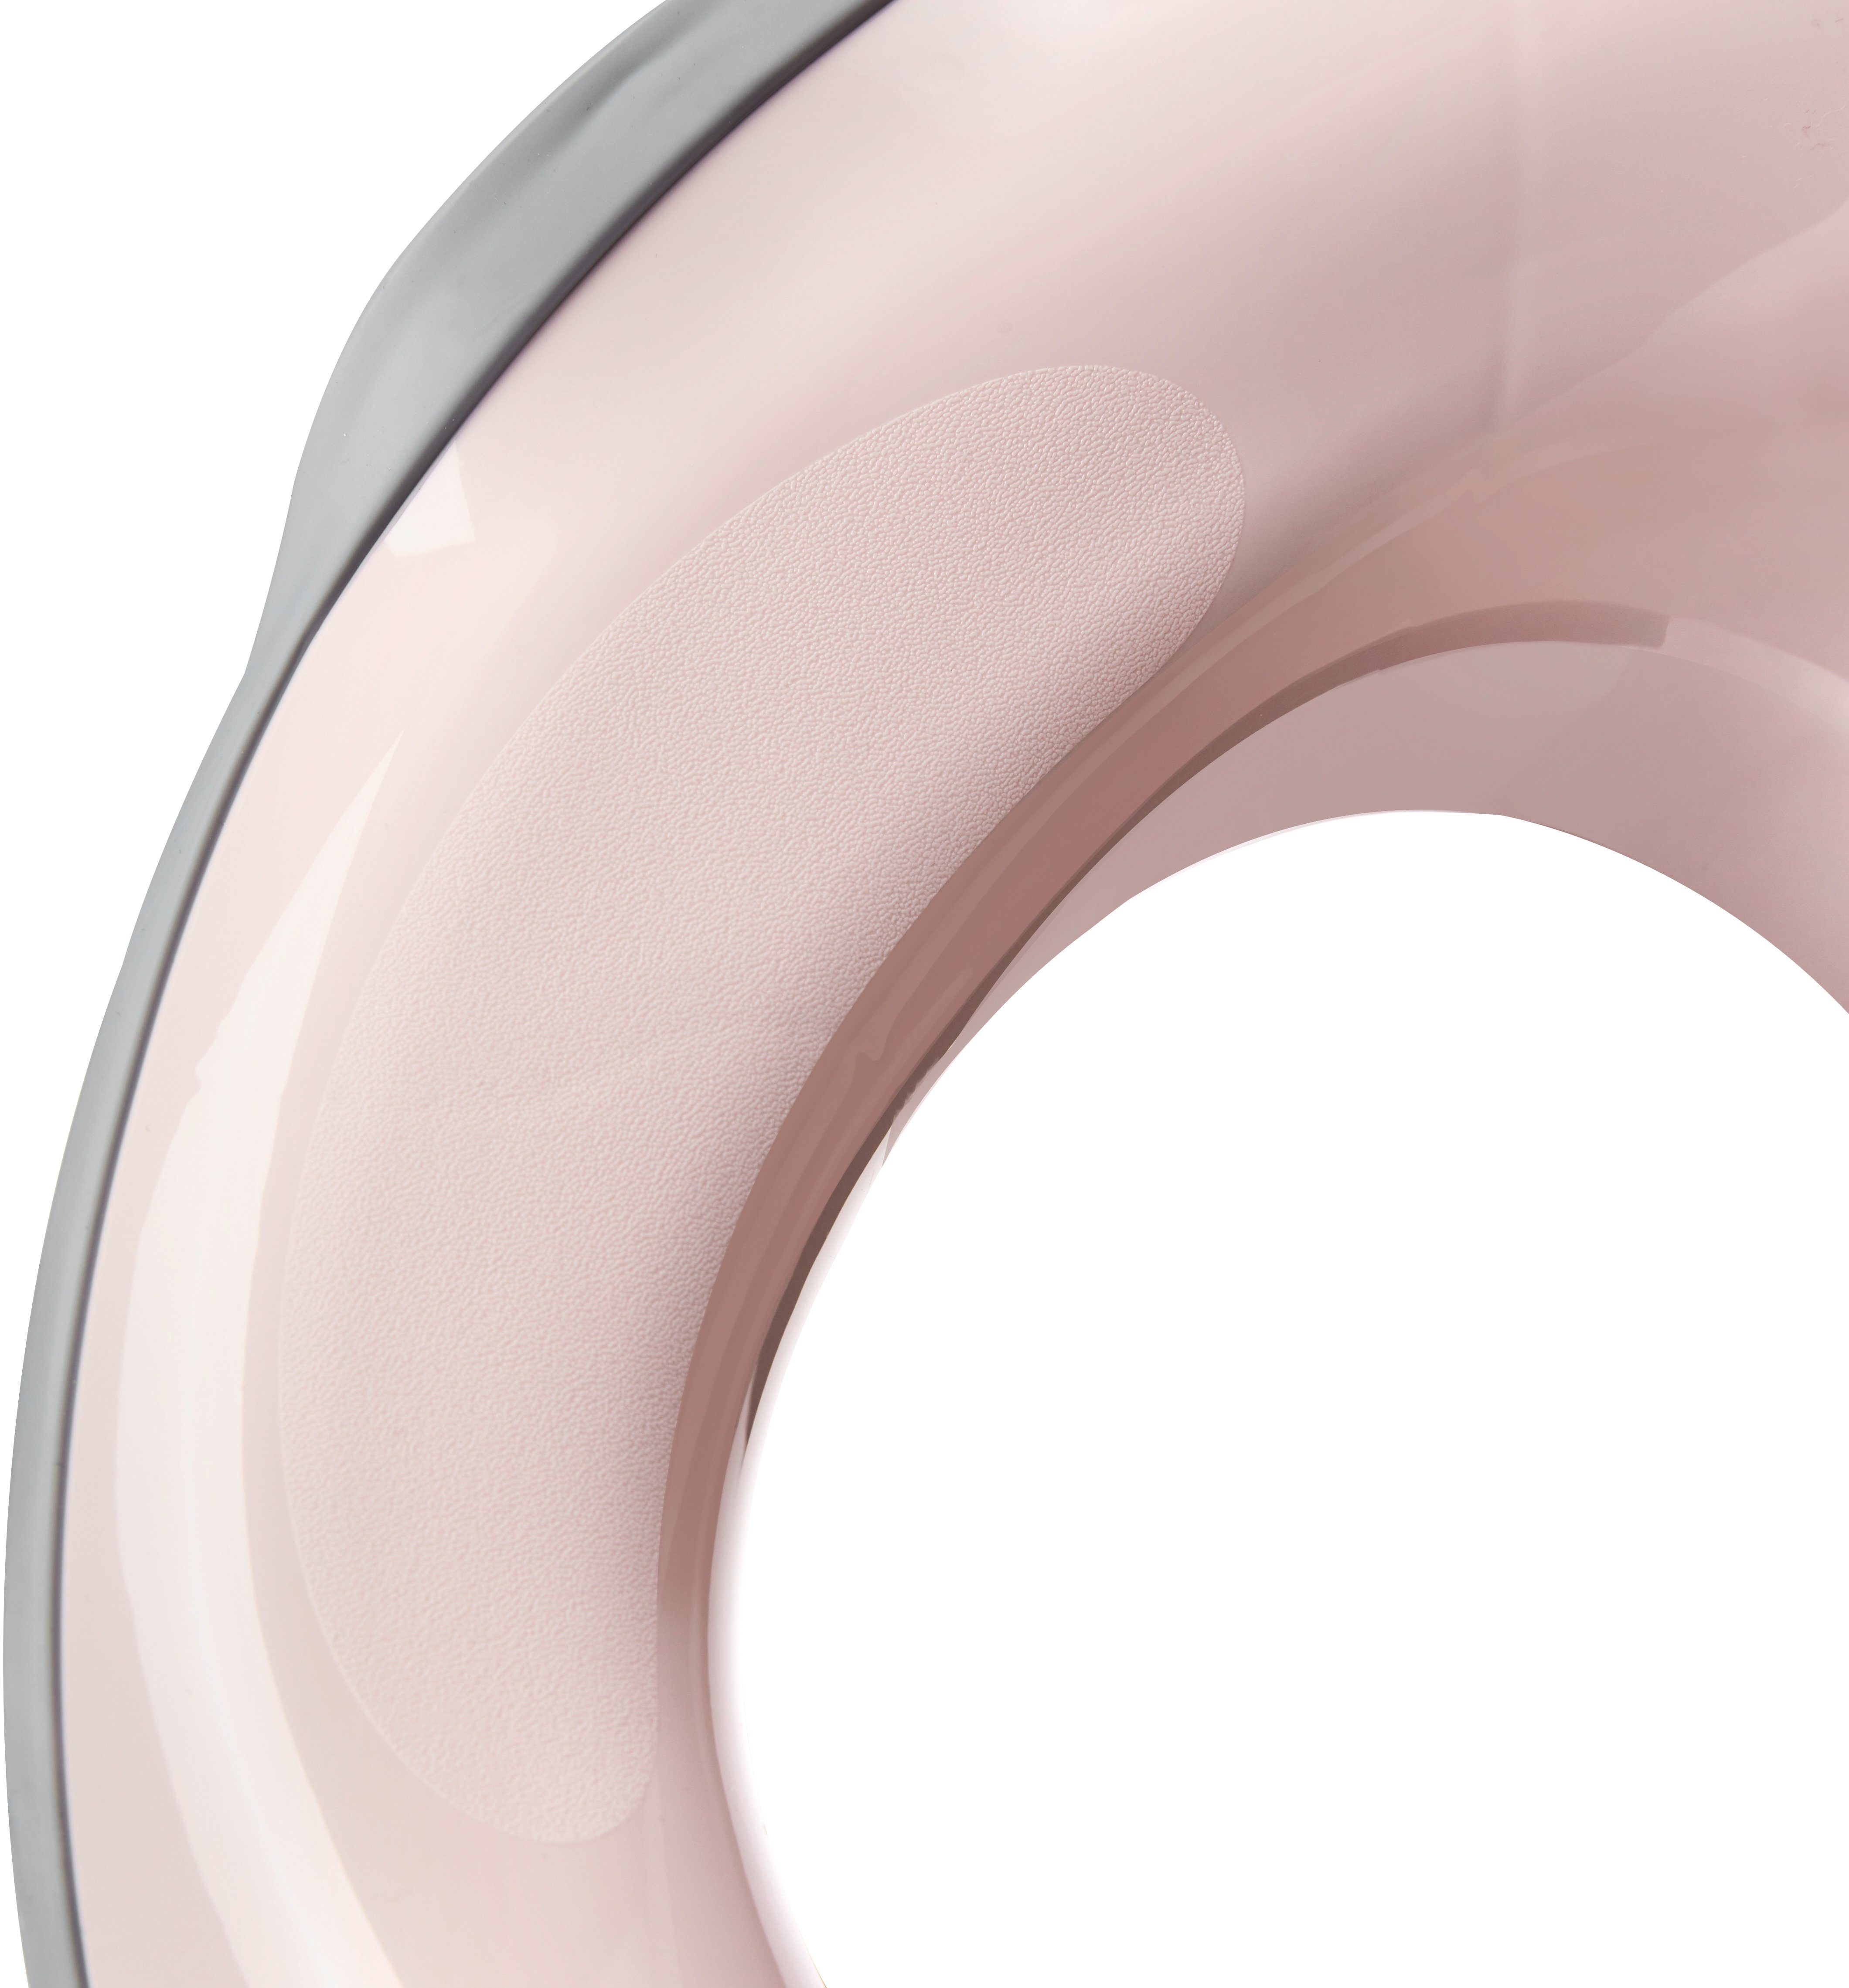 deluxe Toilettentrainer Made Europe, weltweit keeeper kasimir schützt pink, Wald - nordic in FSC® 4in1, babytopf -